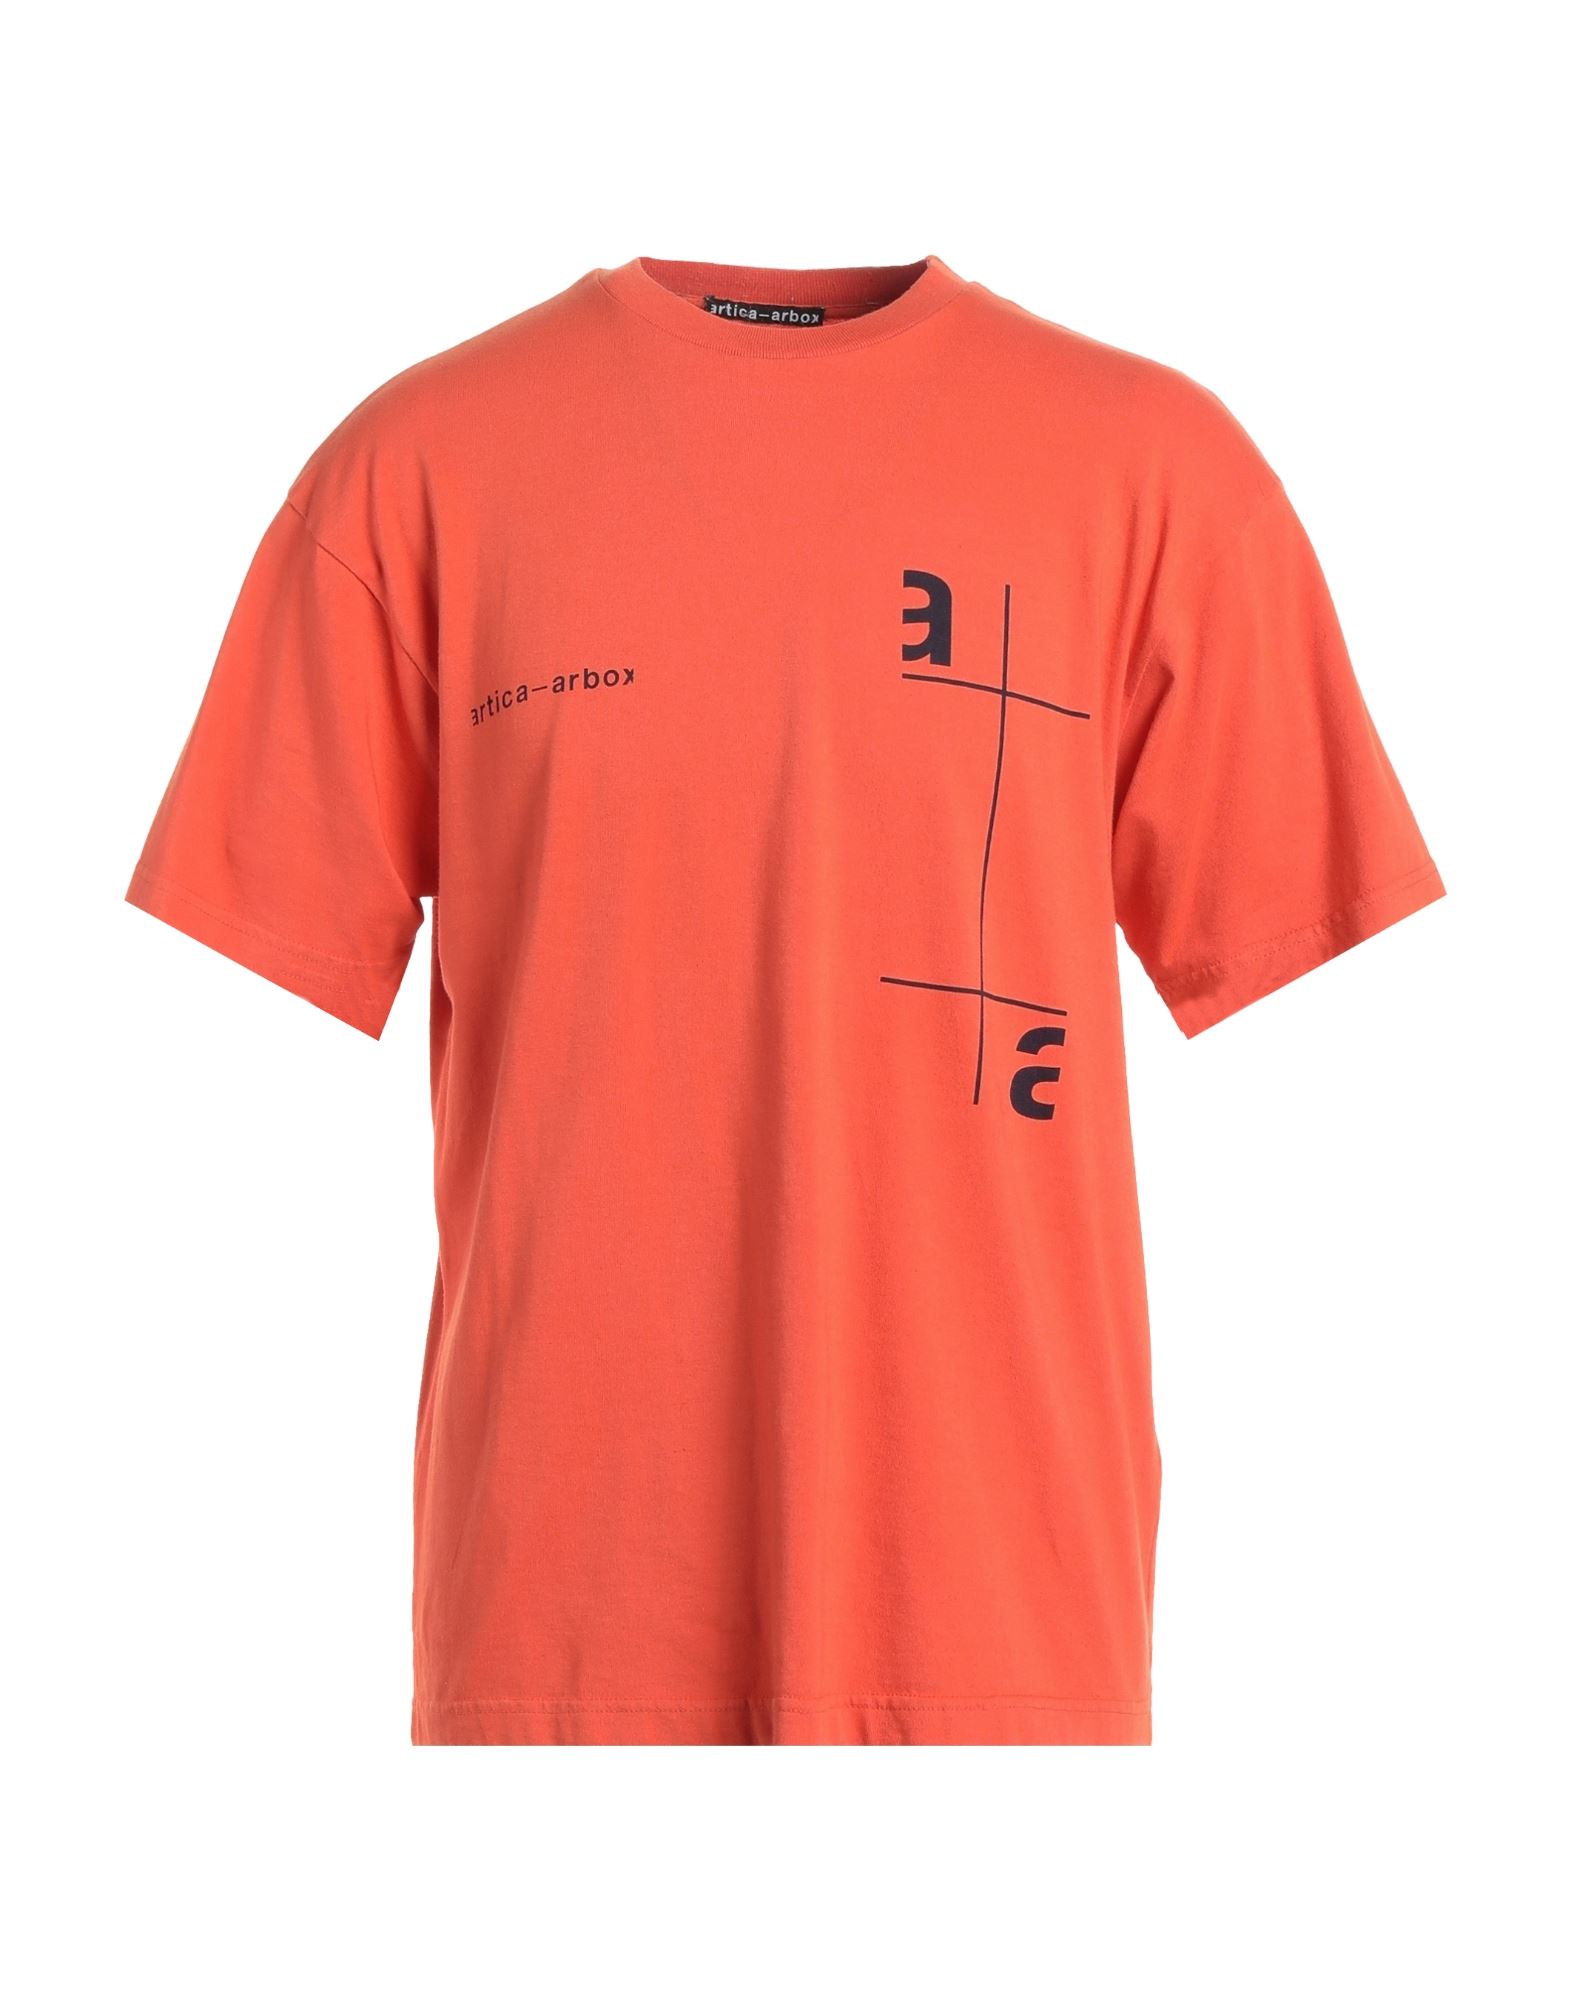 Artica Arbox T-shirts In Orange